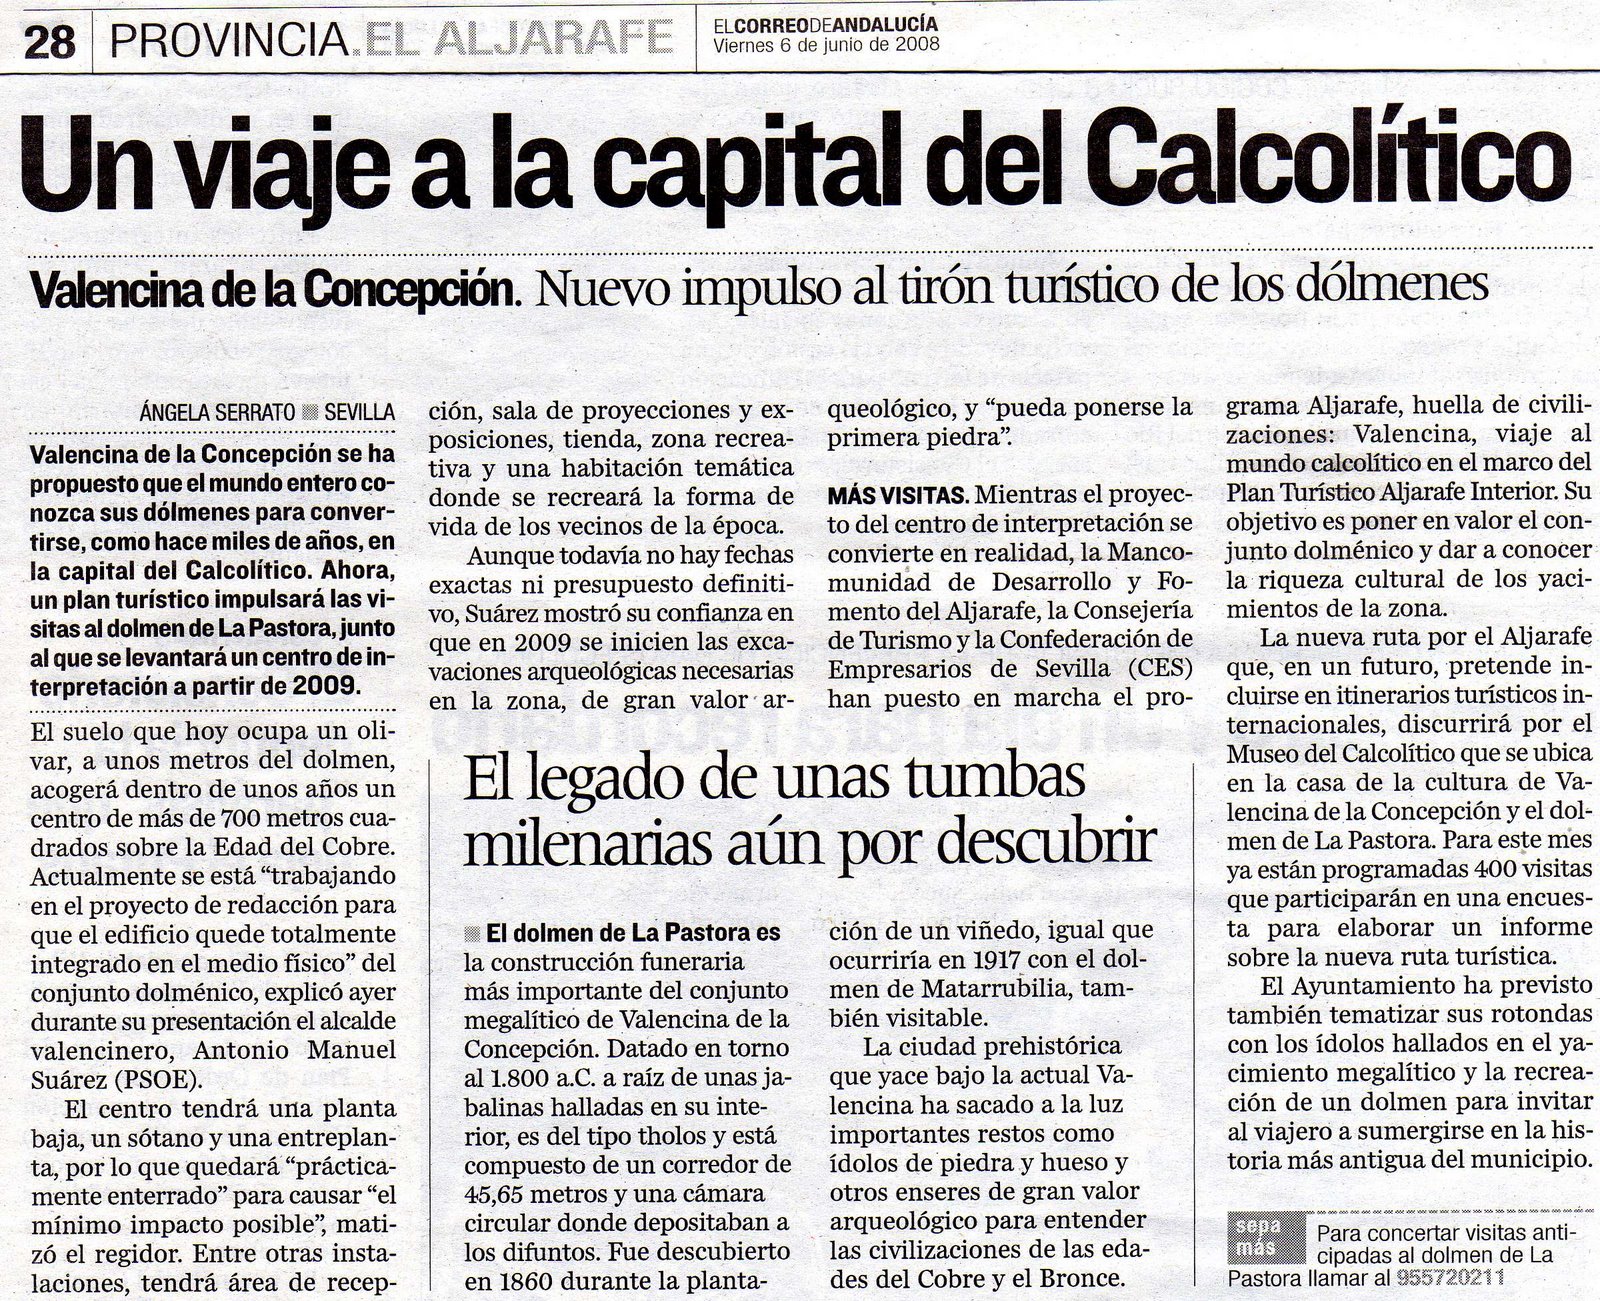 [2008+06+06+CORREO+ANDALUCÃ A+UN+VIAJE+A+LA+CAPITAL+DEL+CALCOLÃ TICO.jpg]